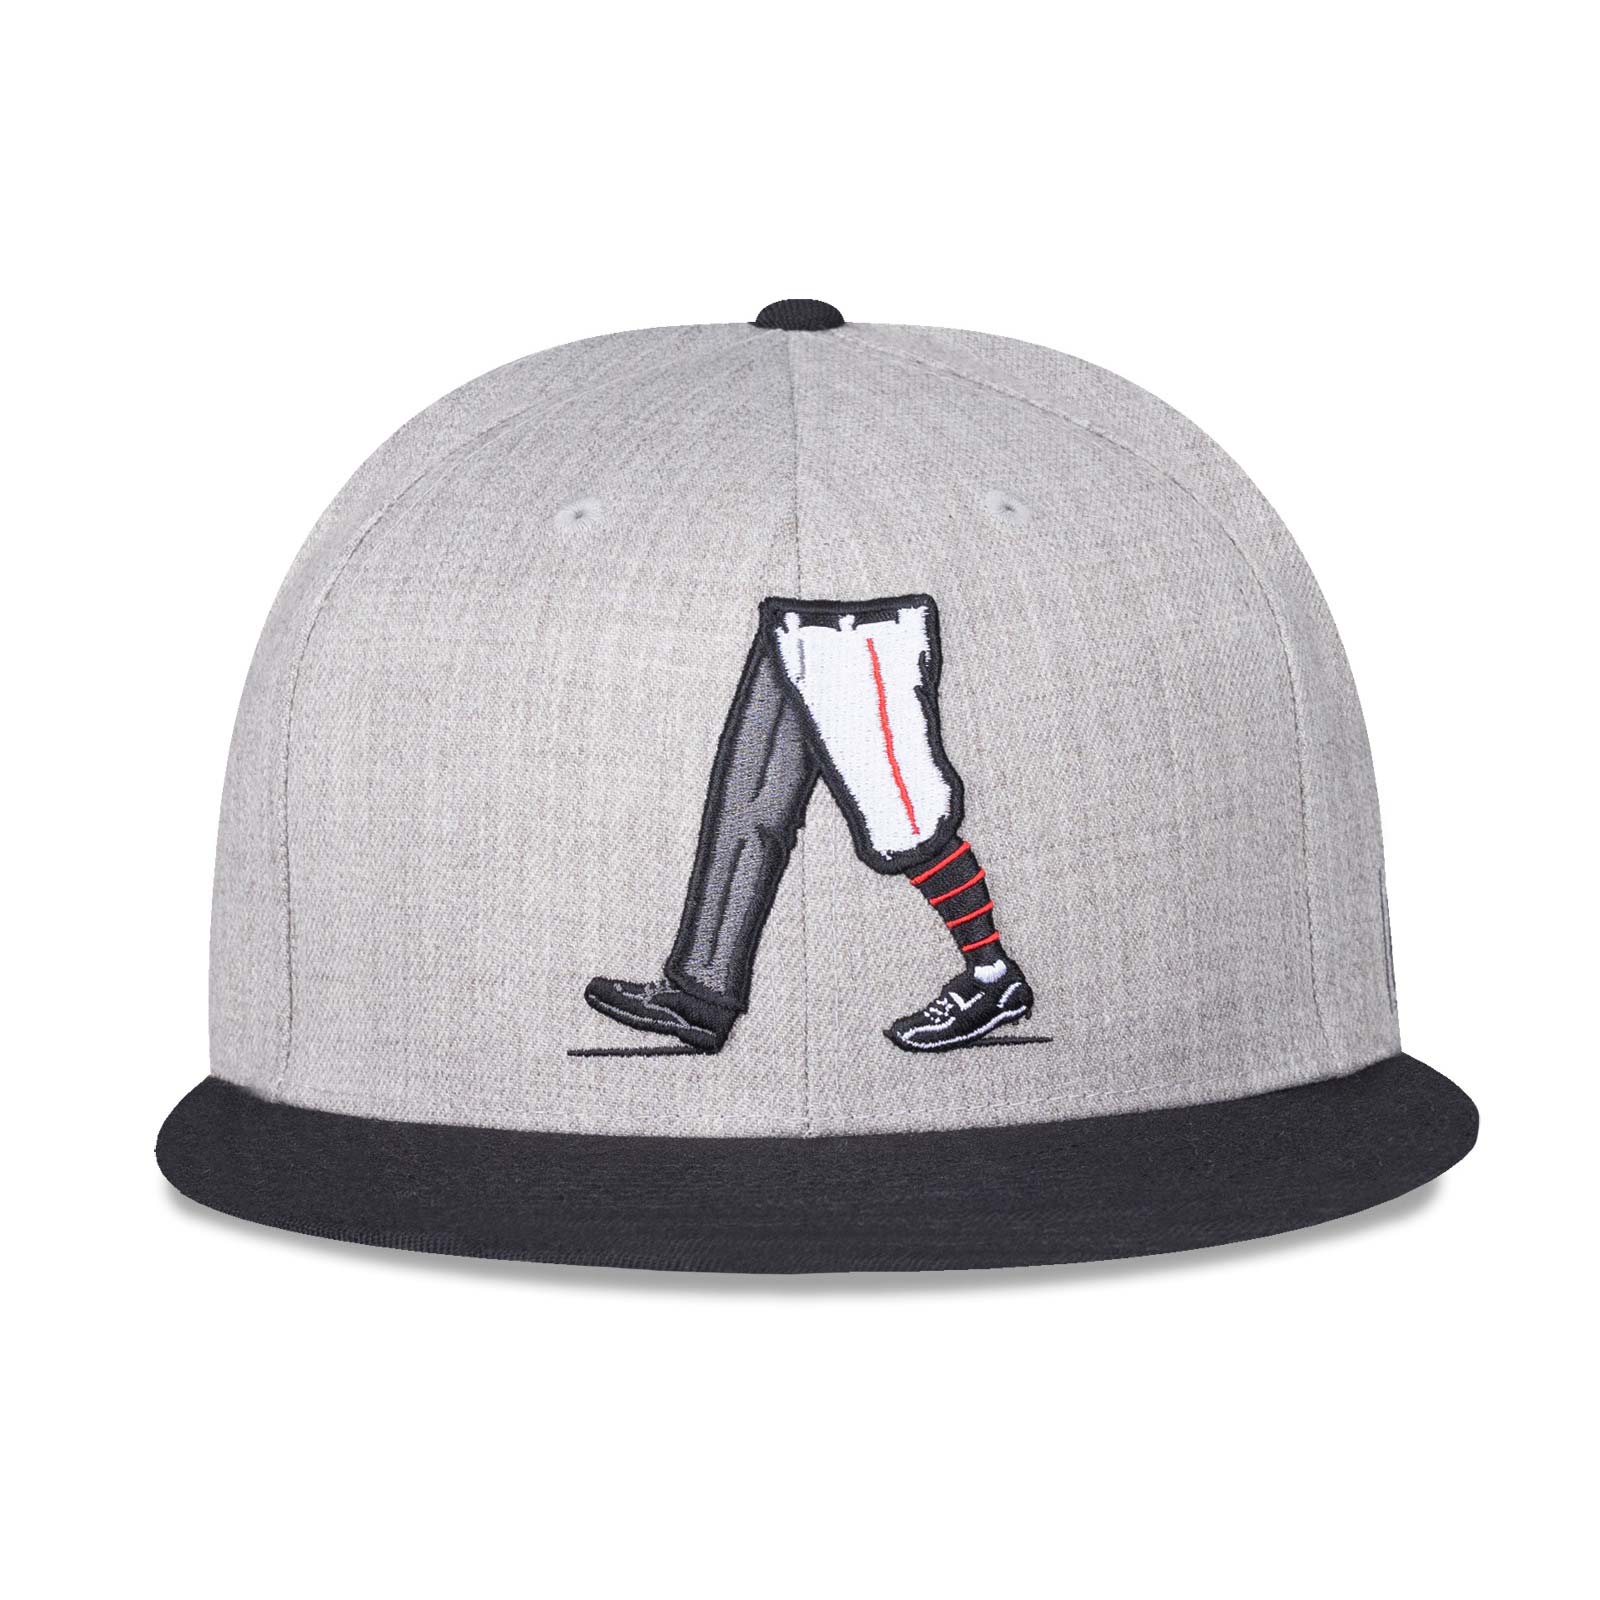 MLB Field Of Dreams Gear, Field of Dreams Hats, Apparel